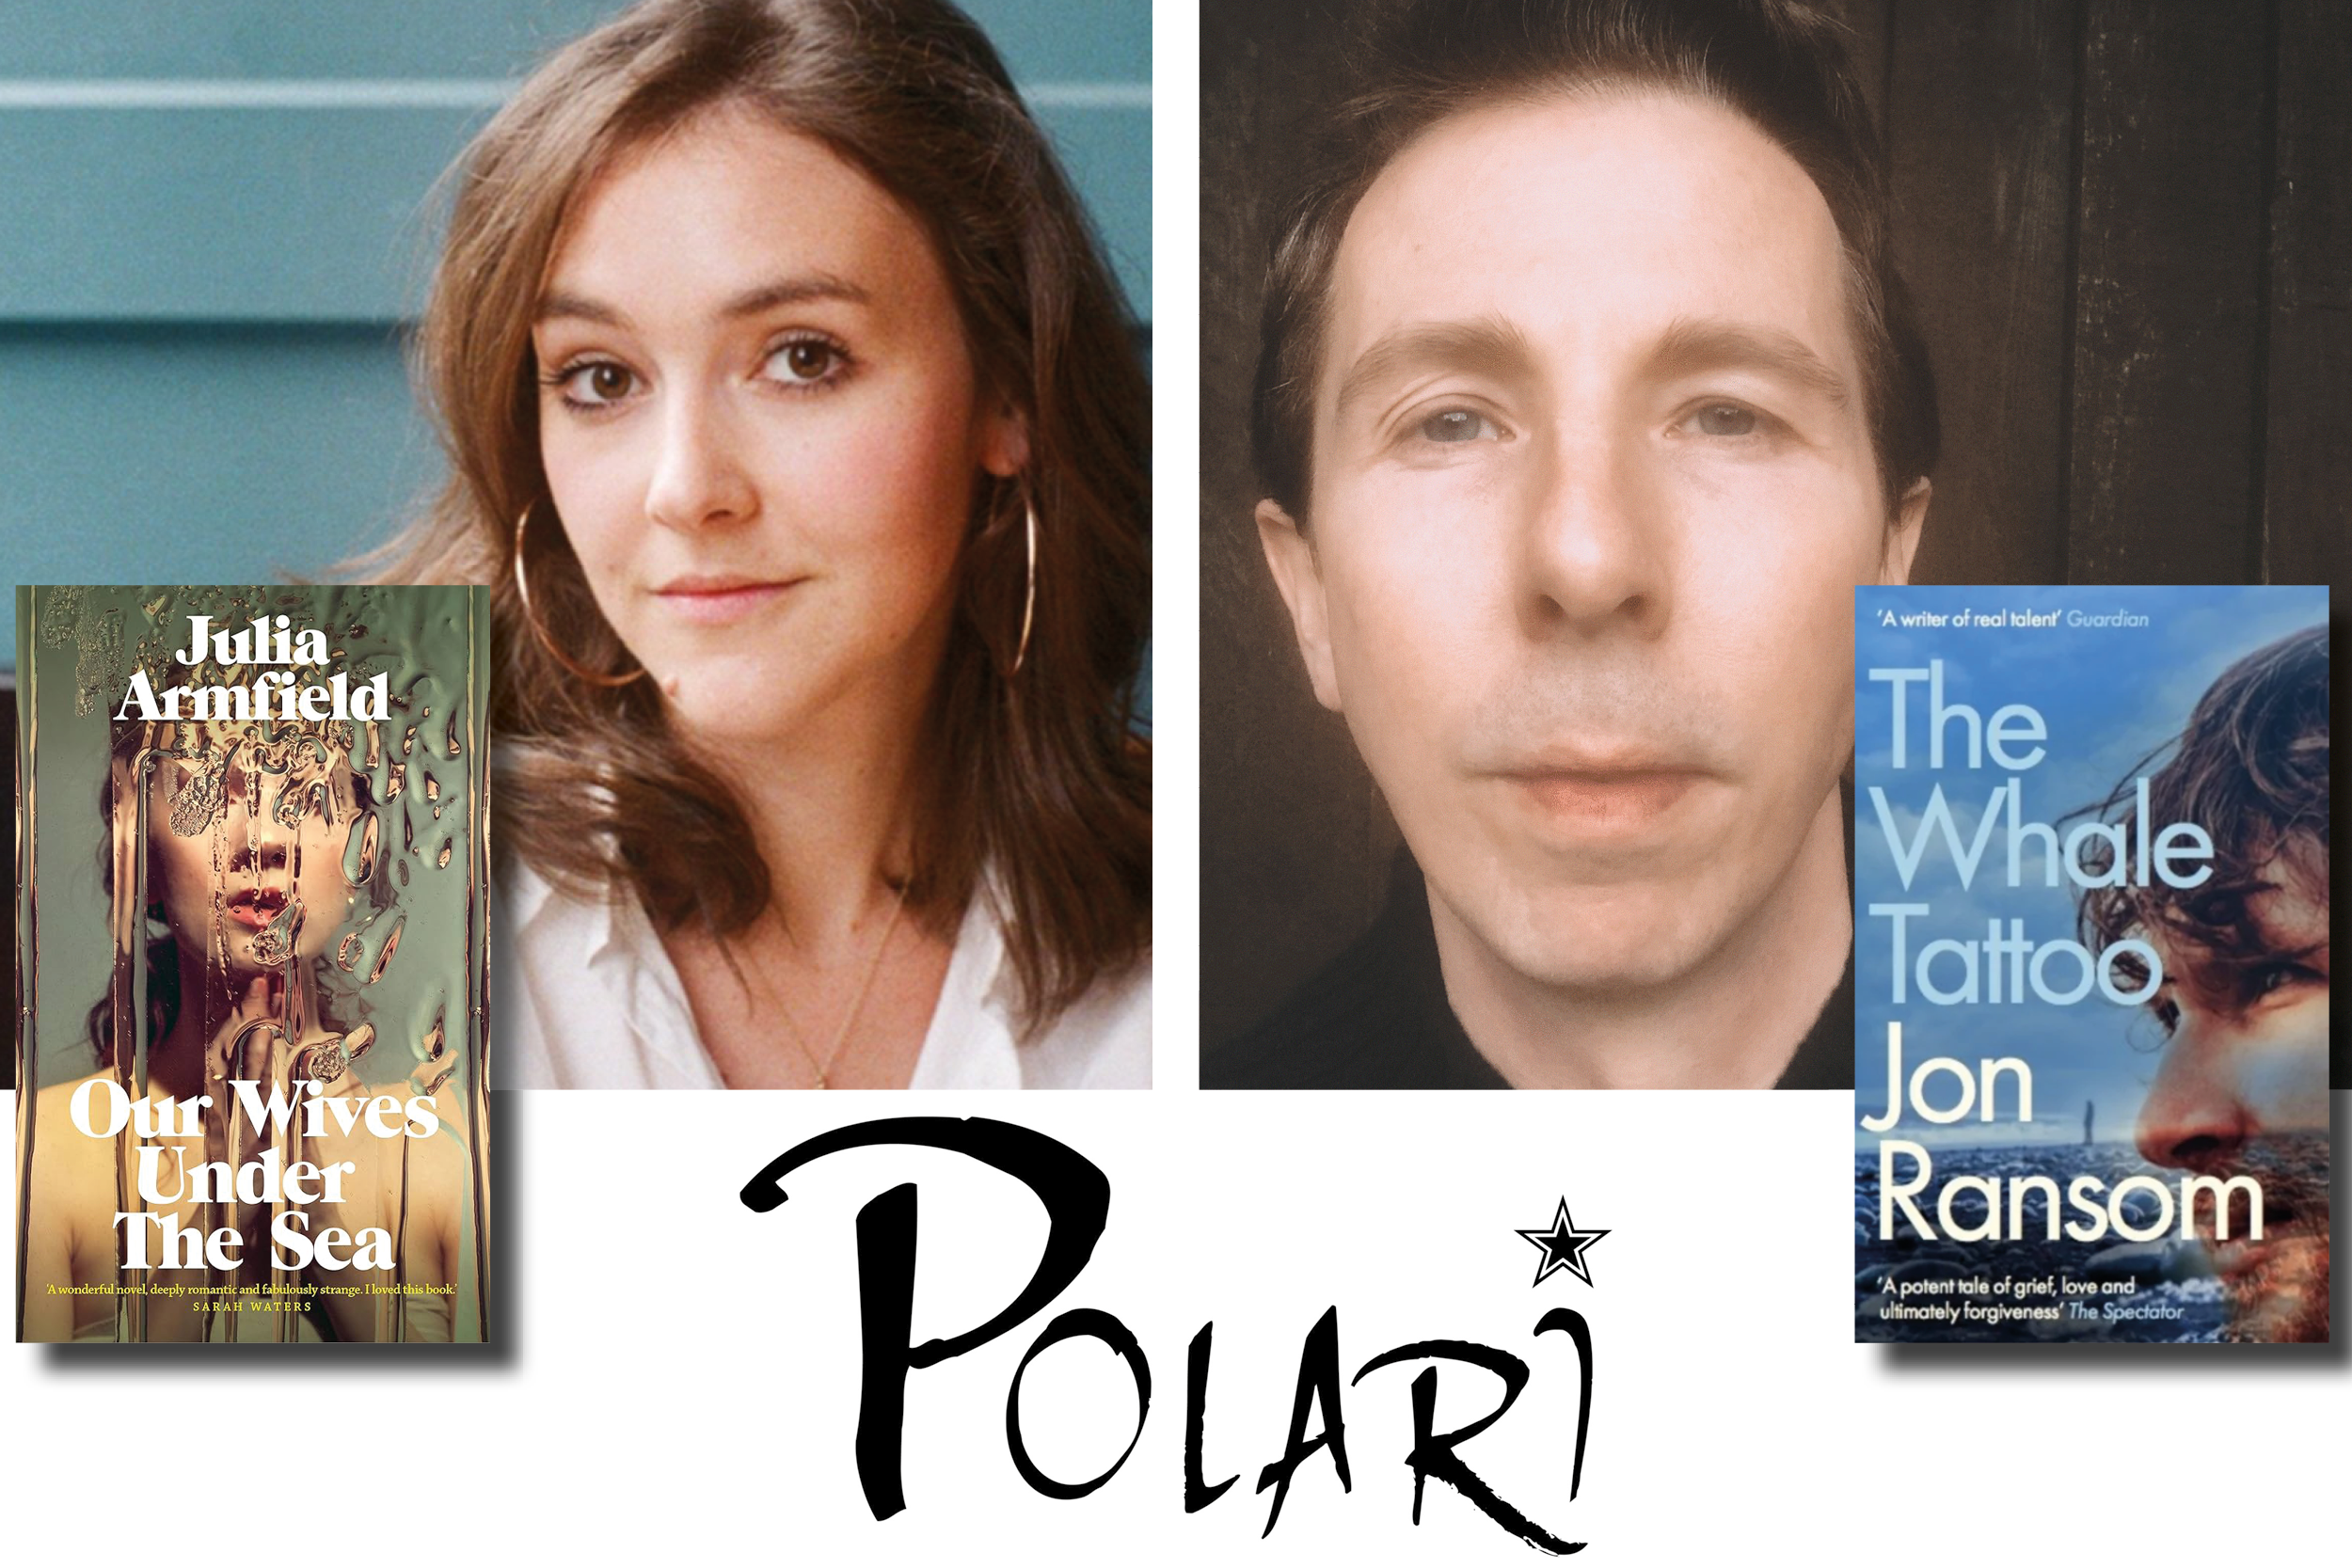 Jon Ransom and Julia Armfield announced as winners of the 2023 Polari Prizes, which celebrate LGBTQ+ literature